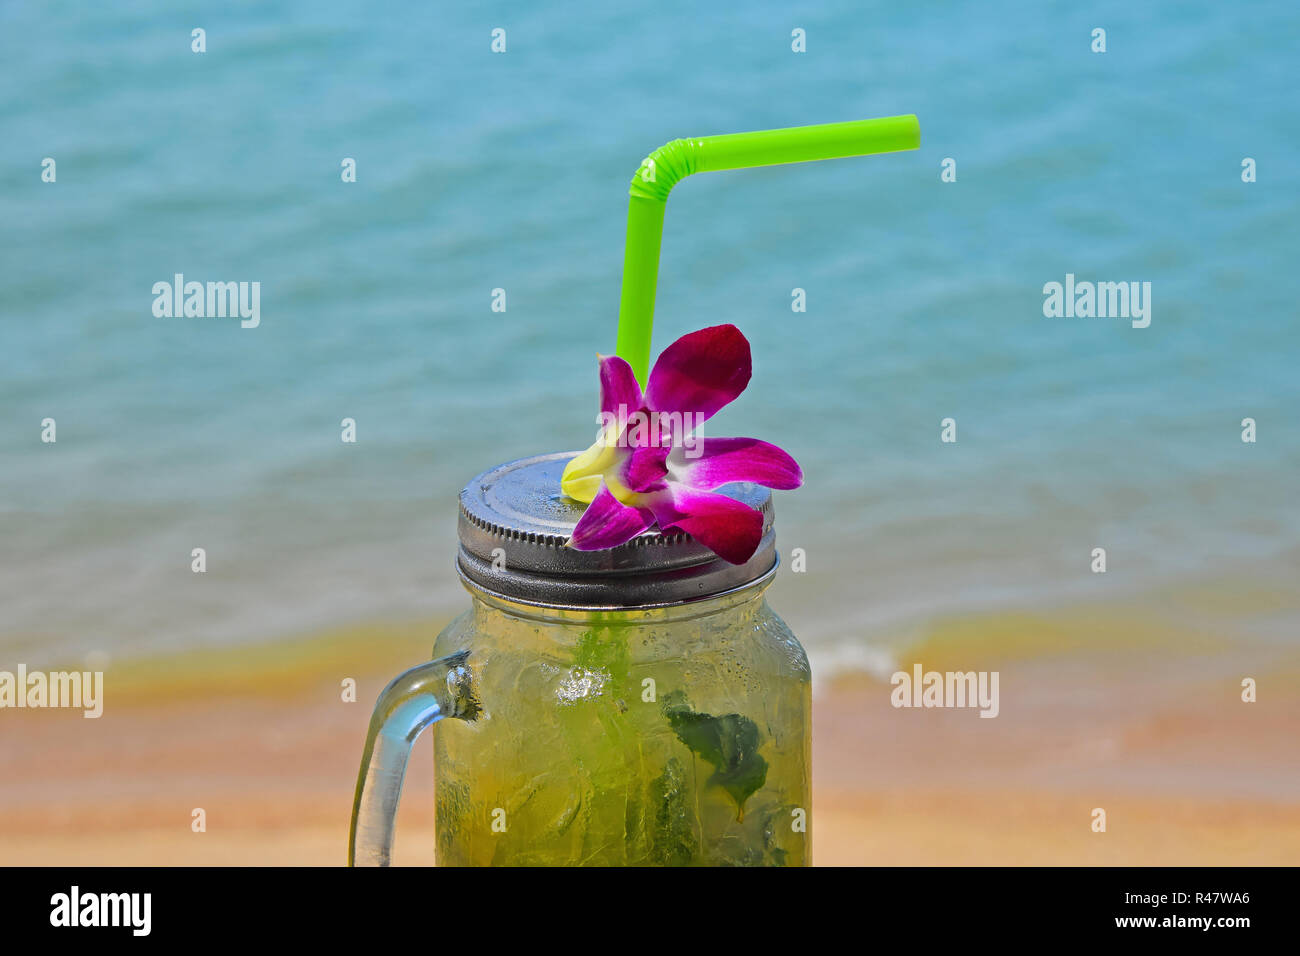 https://c8.alamy.com/comp/R47WA6/big-glass-of-mojito-with-orchid-flower-on-beach-R47WA6.jpg